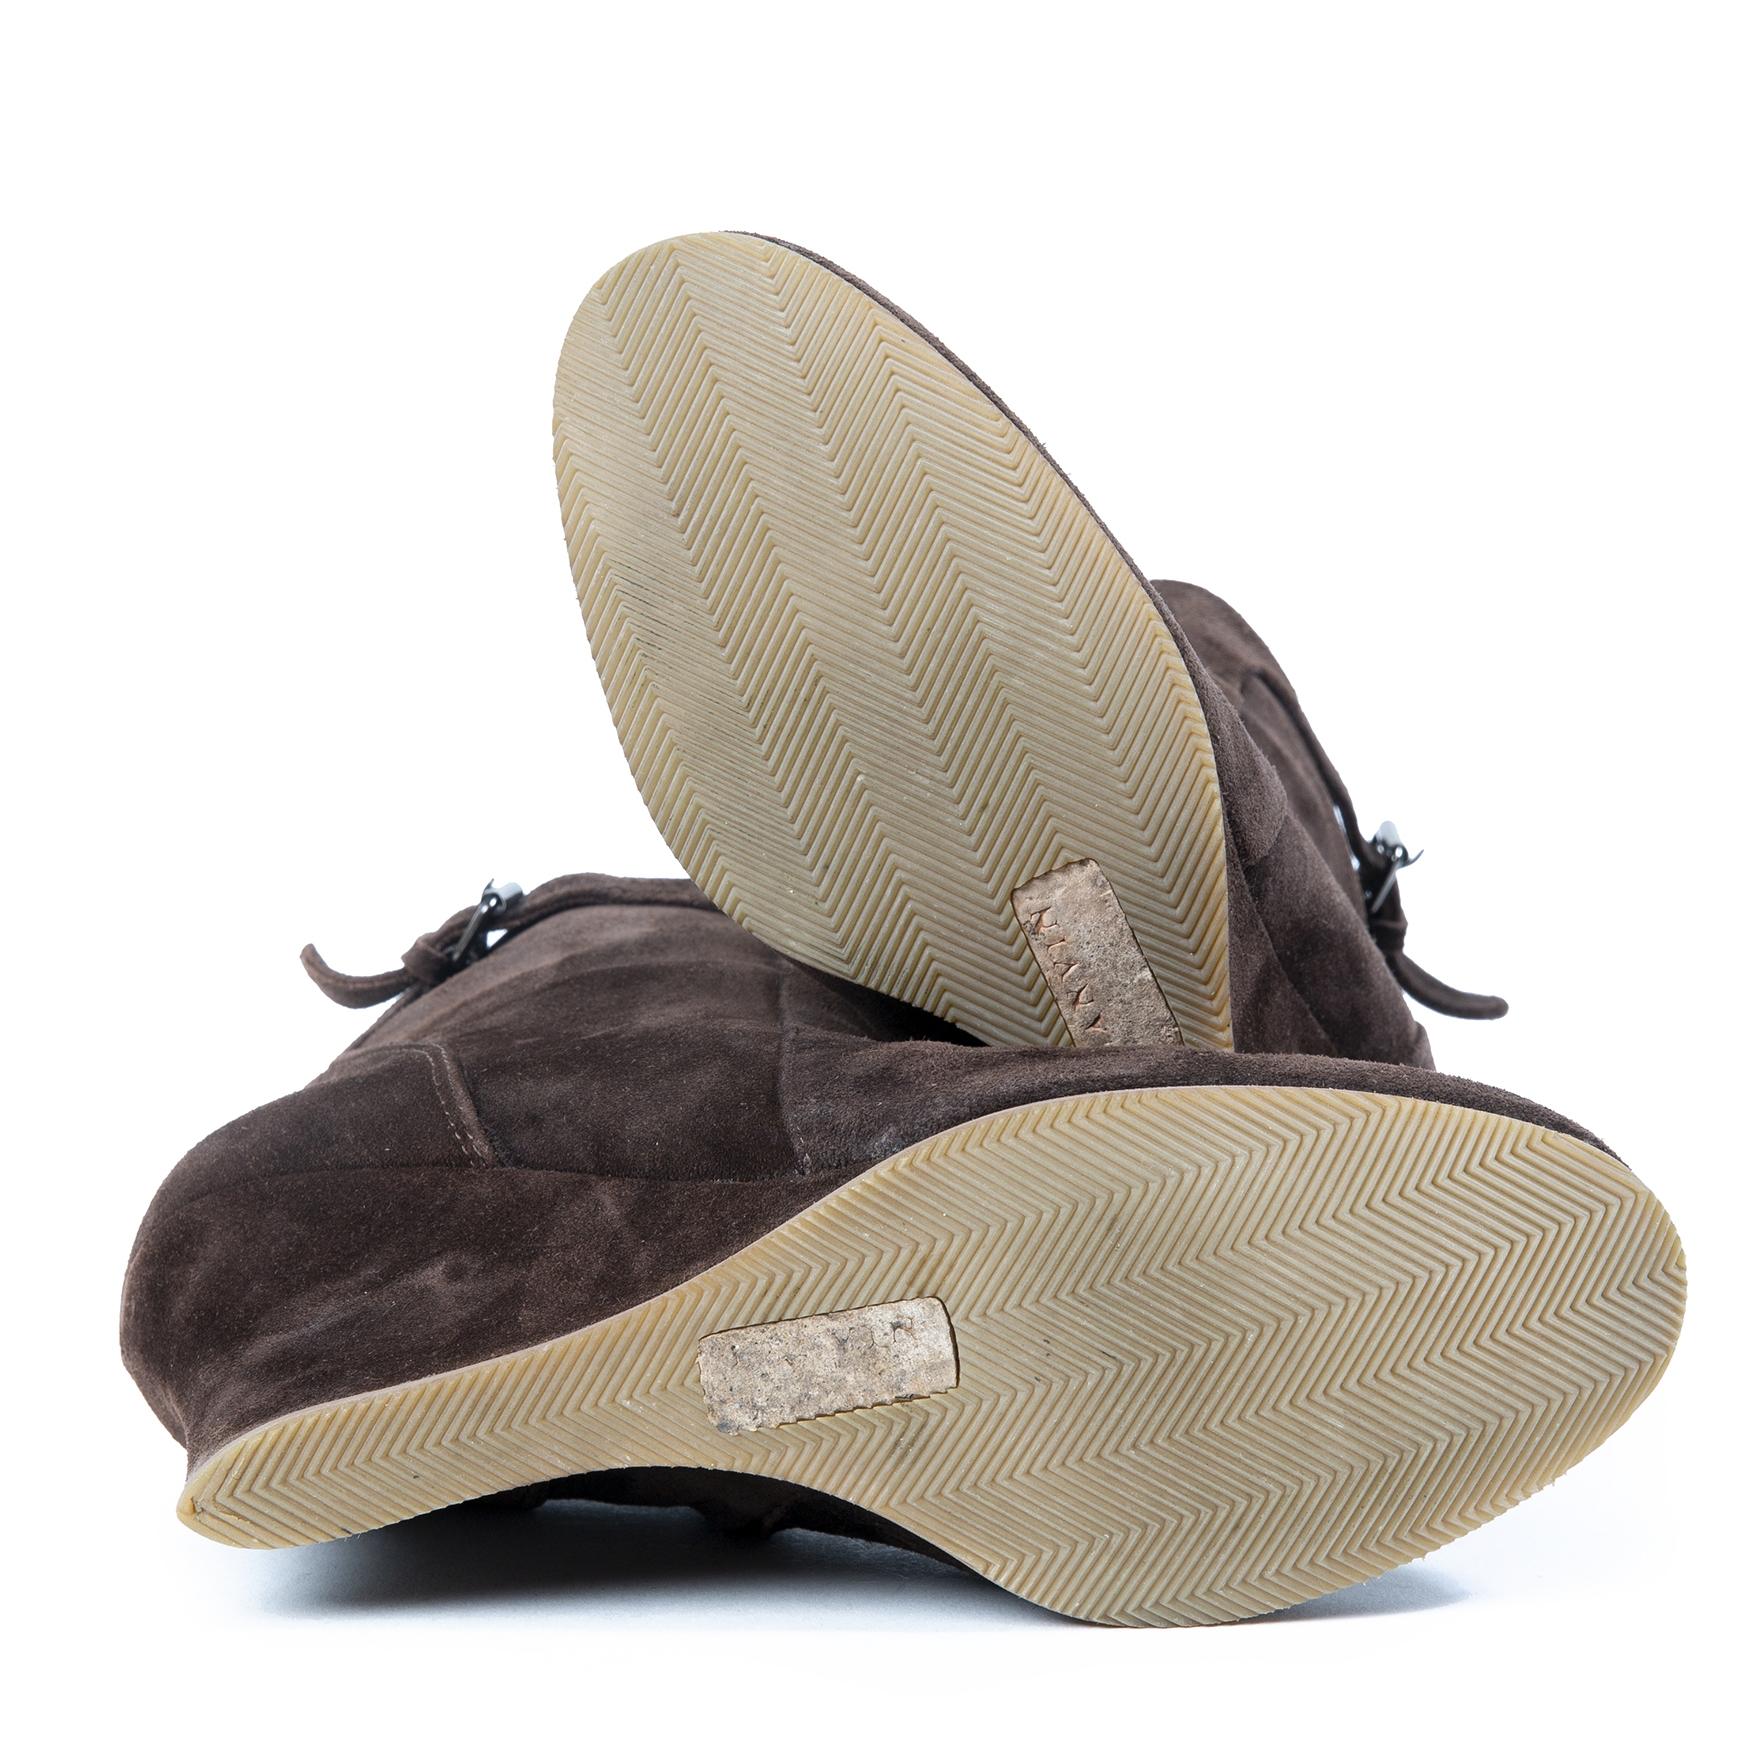 Black Lanvin Suede Wedge Boots - Size 38.5